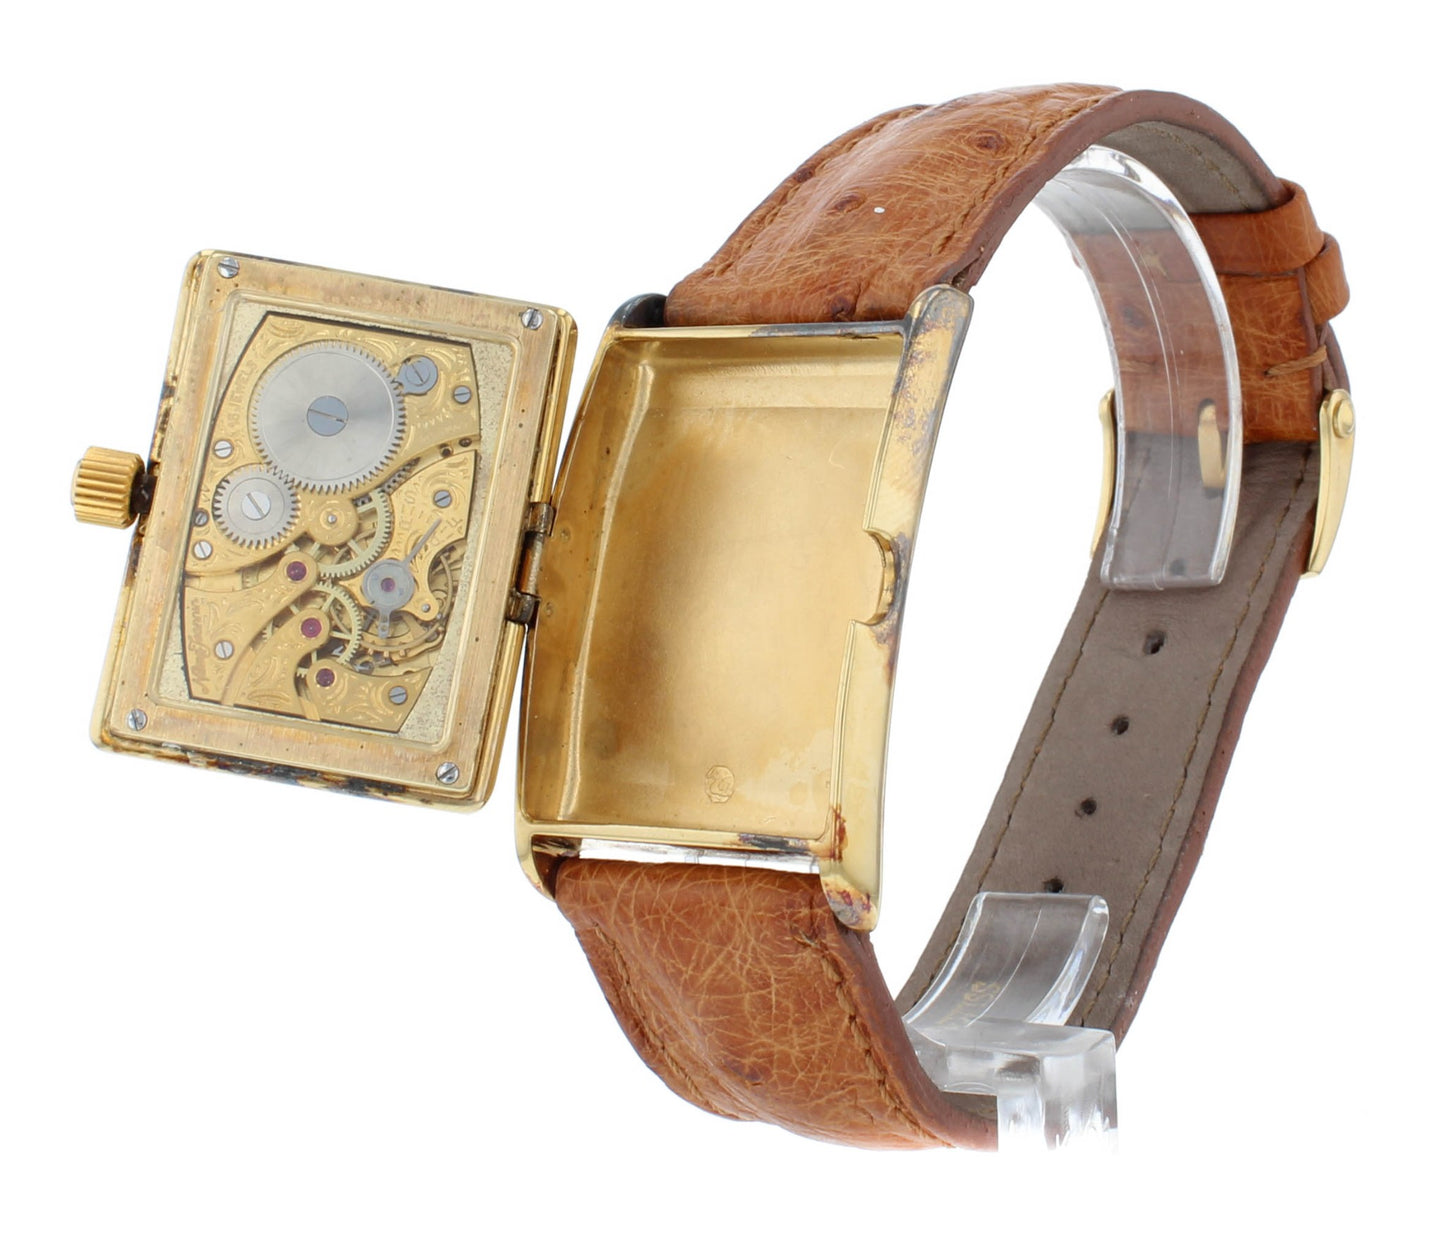 Chronoswiss Numa Jeannin Fleurier Limited Edition Manual Wind Men's Watch